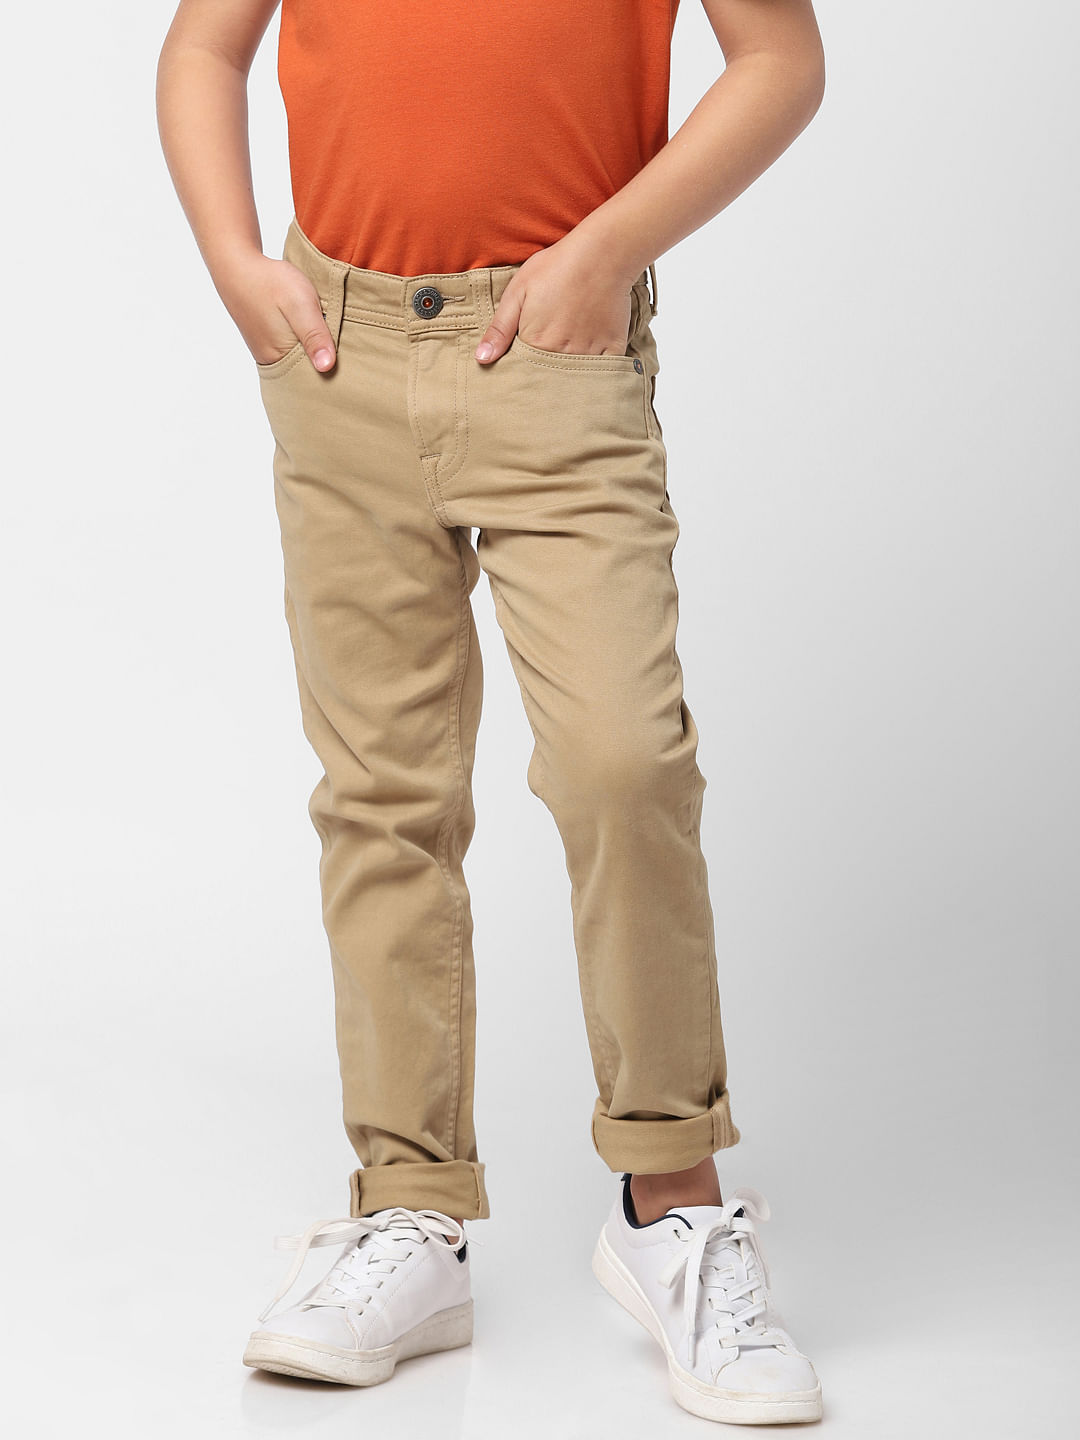 Toddler Boys' Slim Fit Chino Pants - Cat & Jack™ Brown 5t : Target